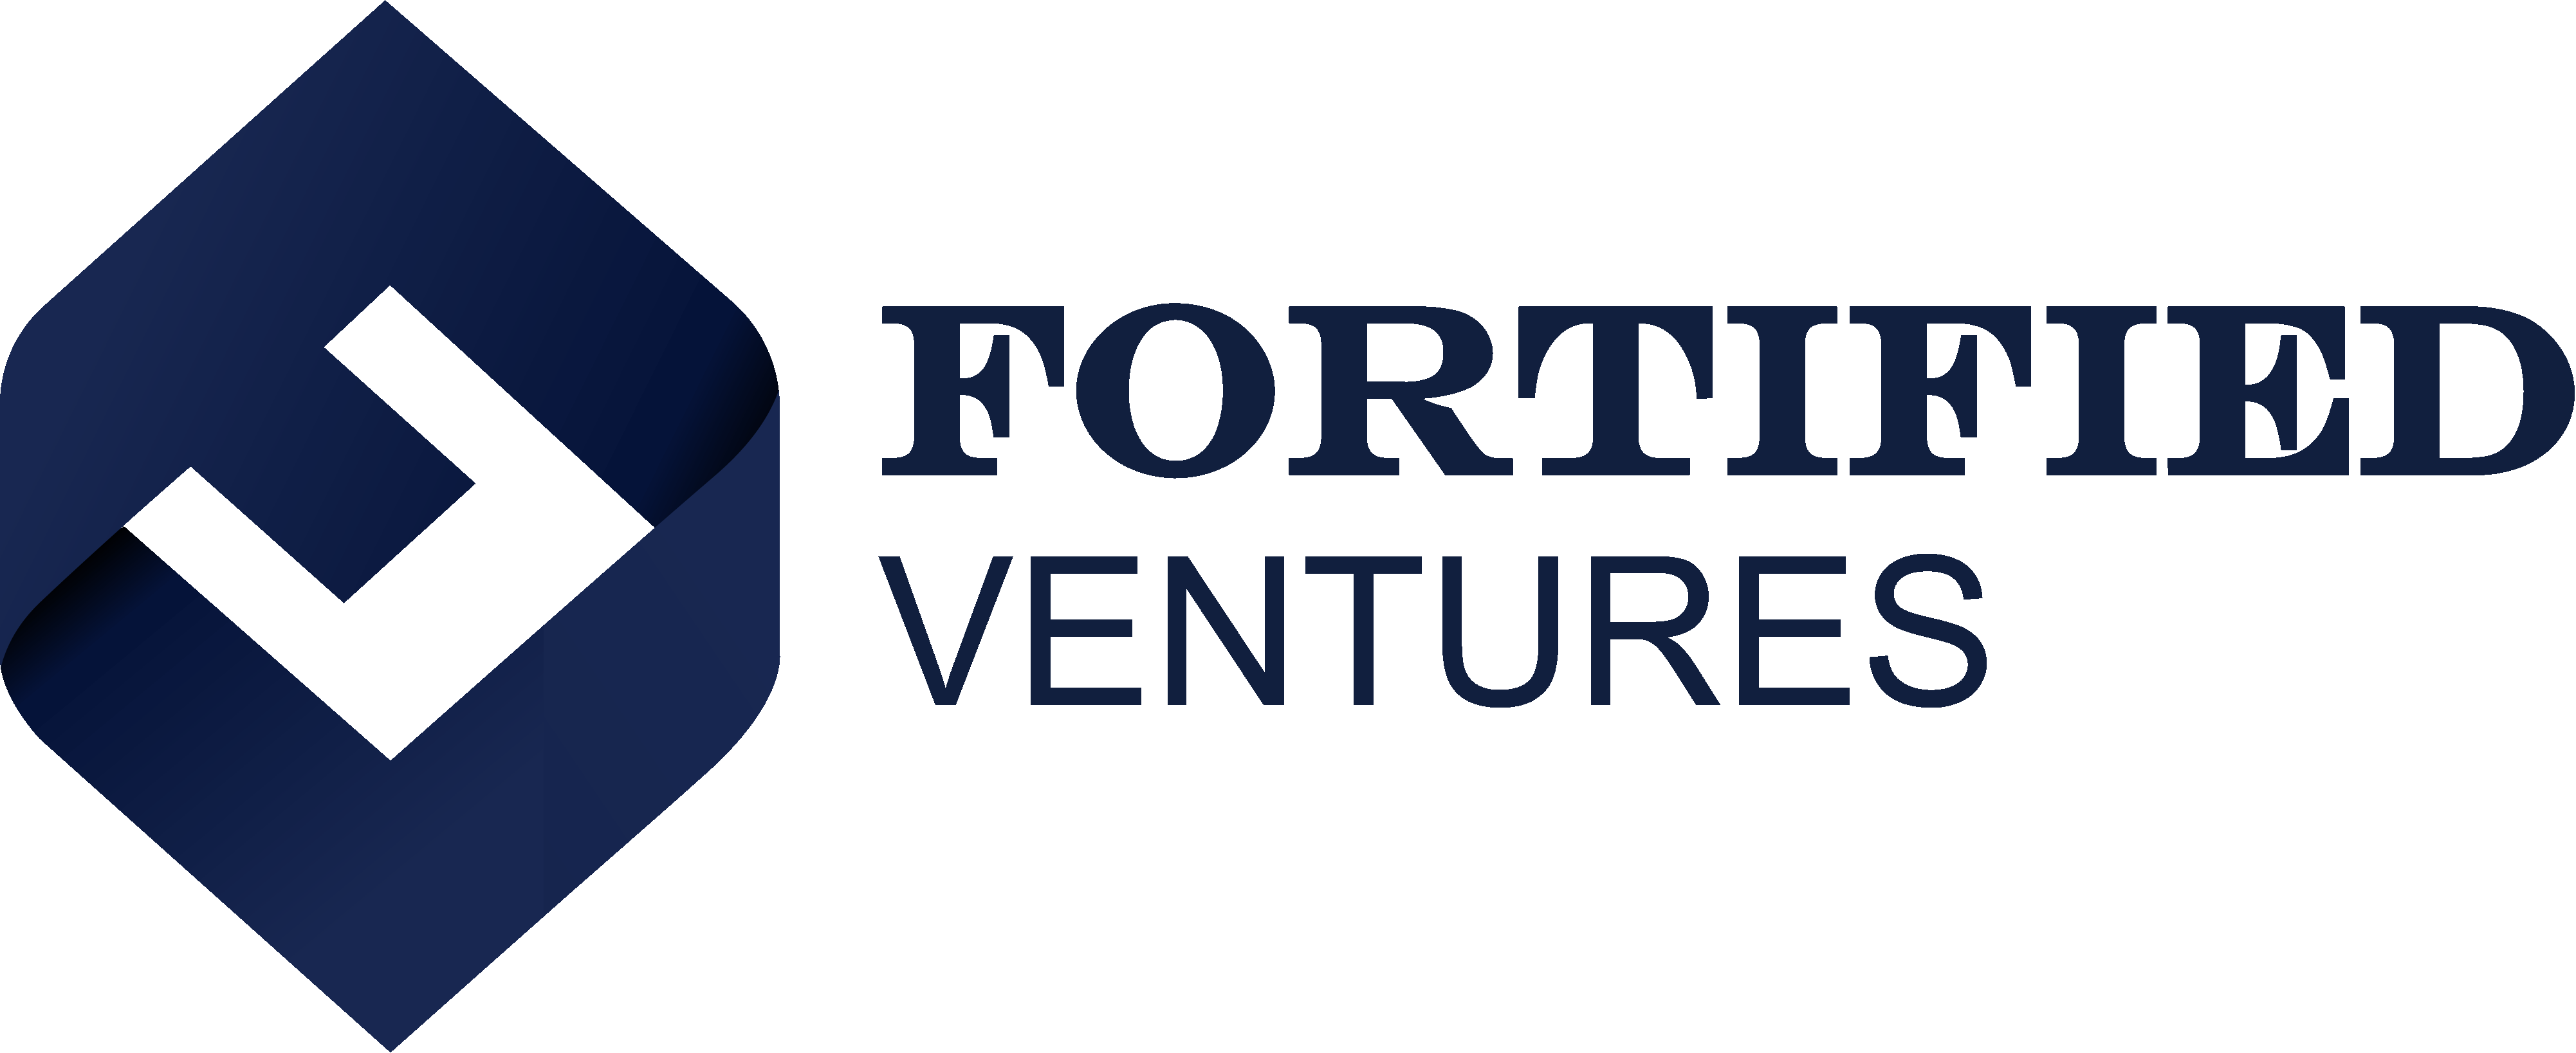 Fortified Ventures